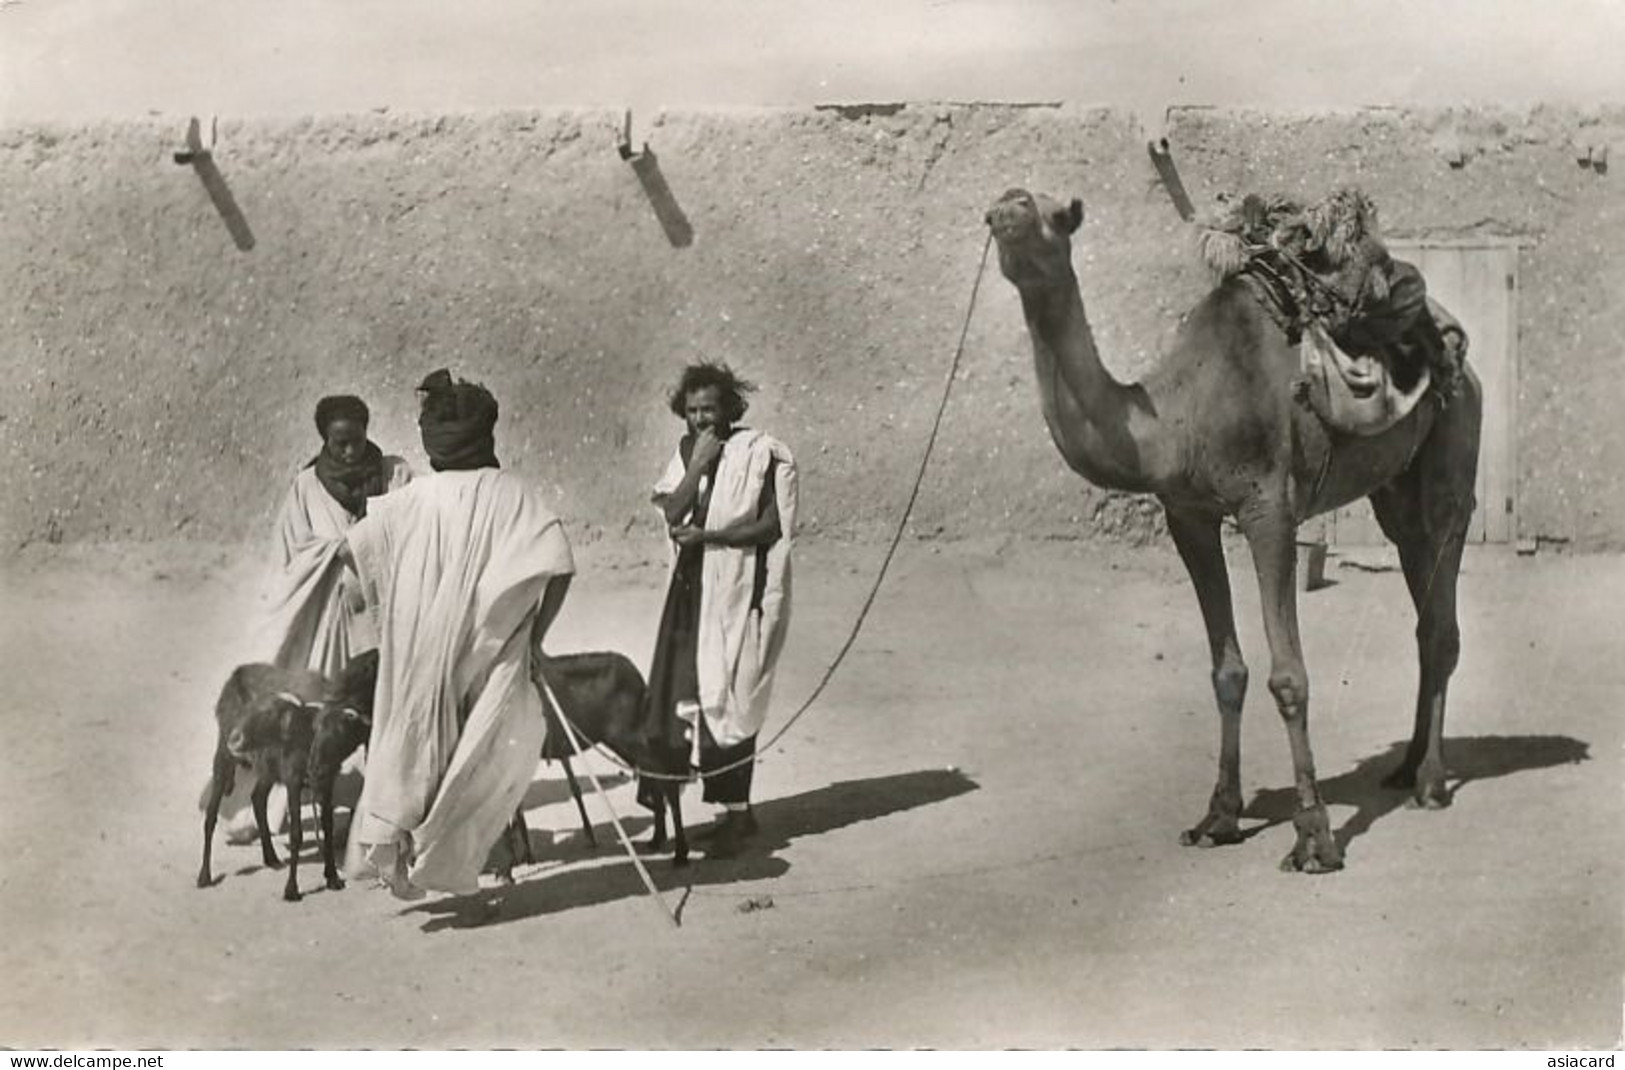 Real Photo Souvenir Mauritanie Caravane Chameaux Camel Caravan Touareg With Sheeps . - Mauritanie